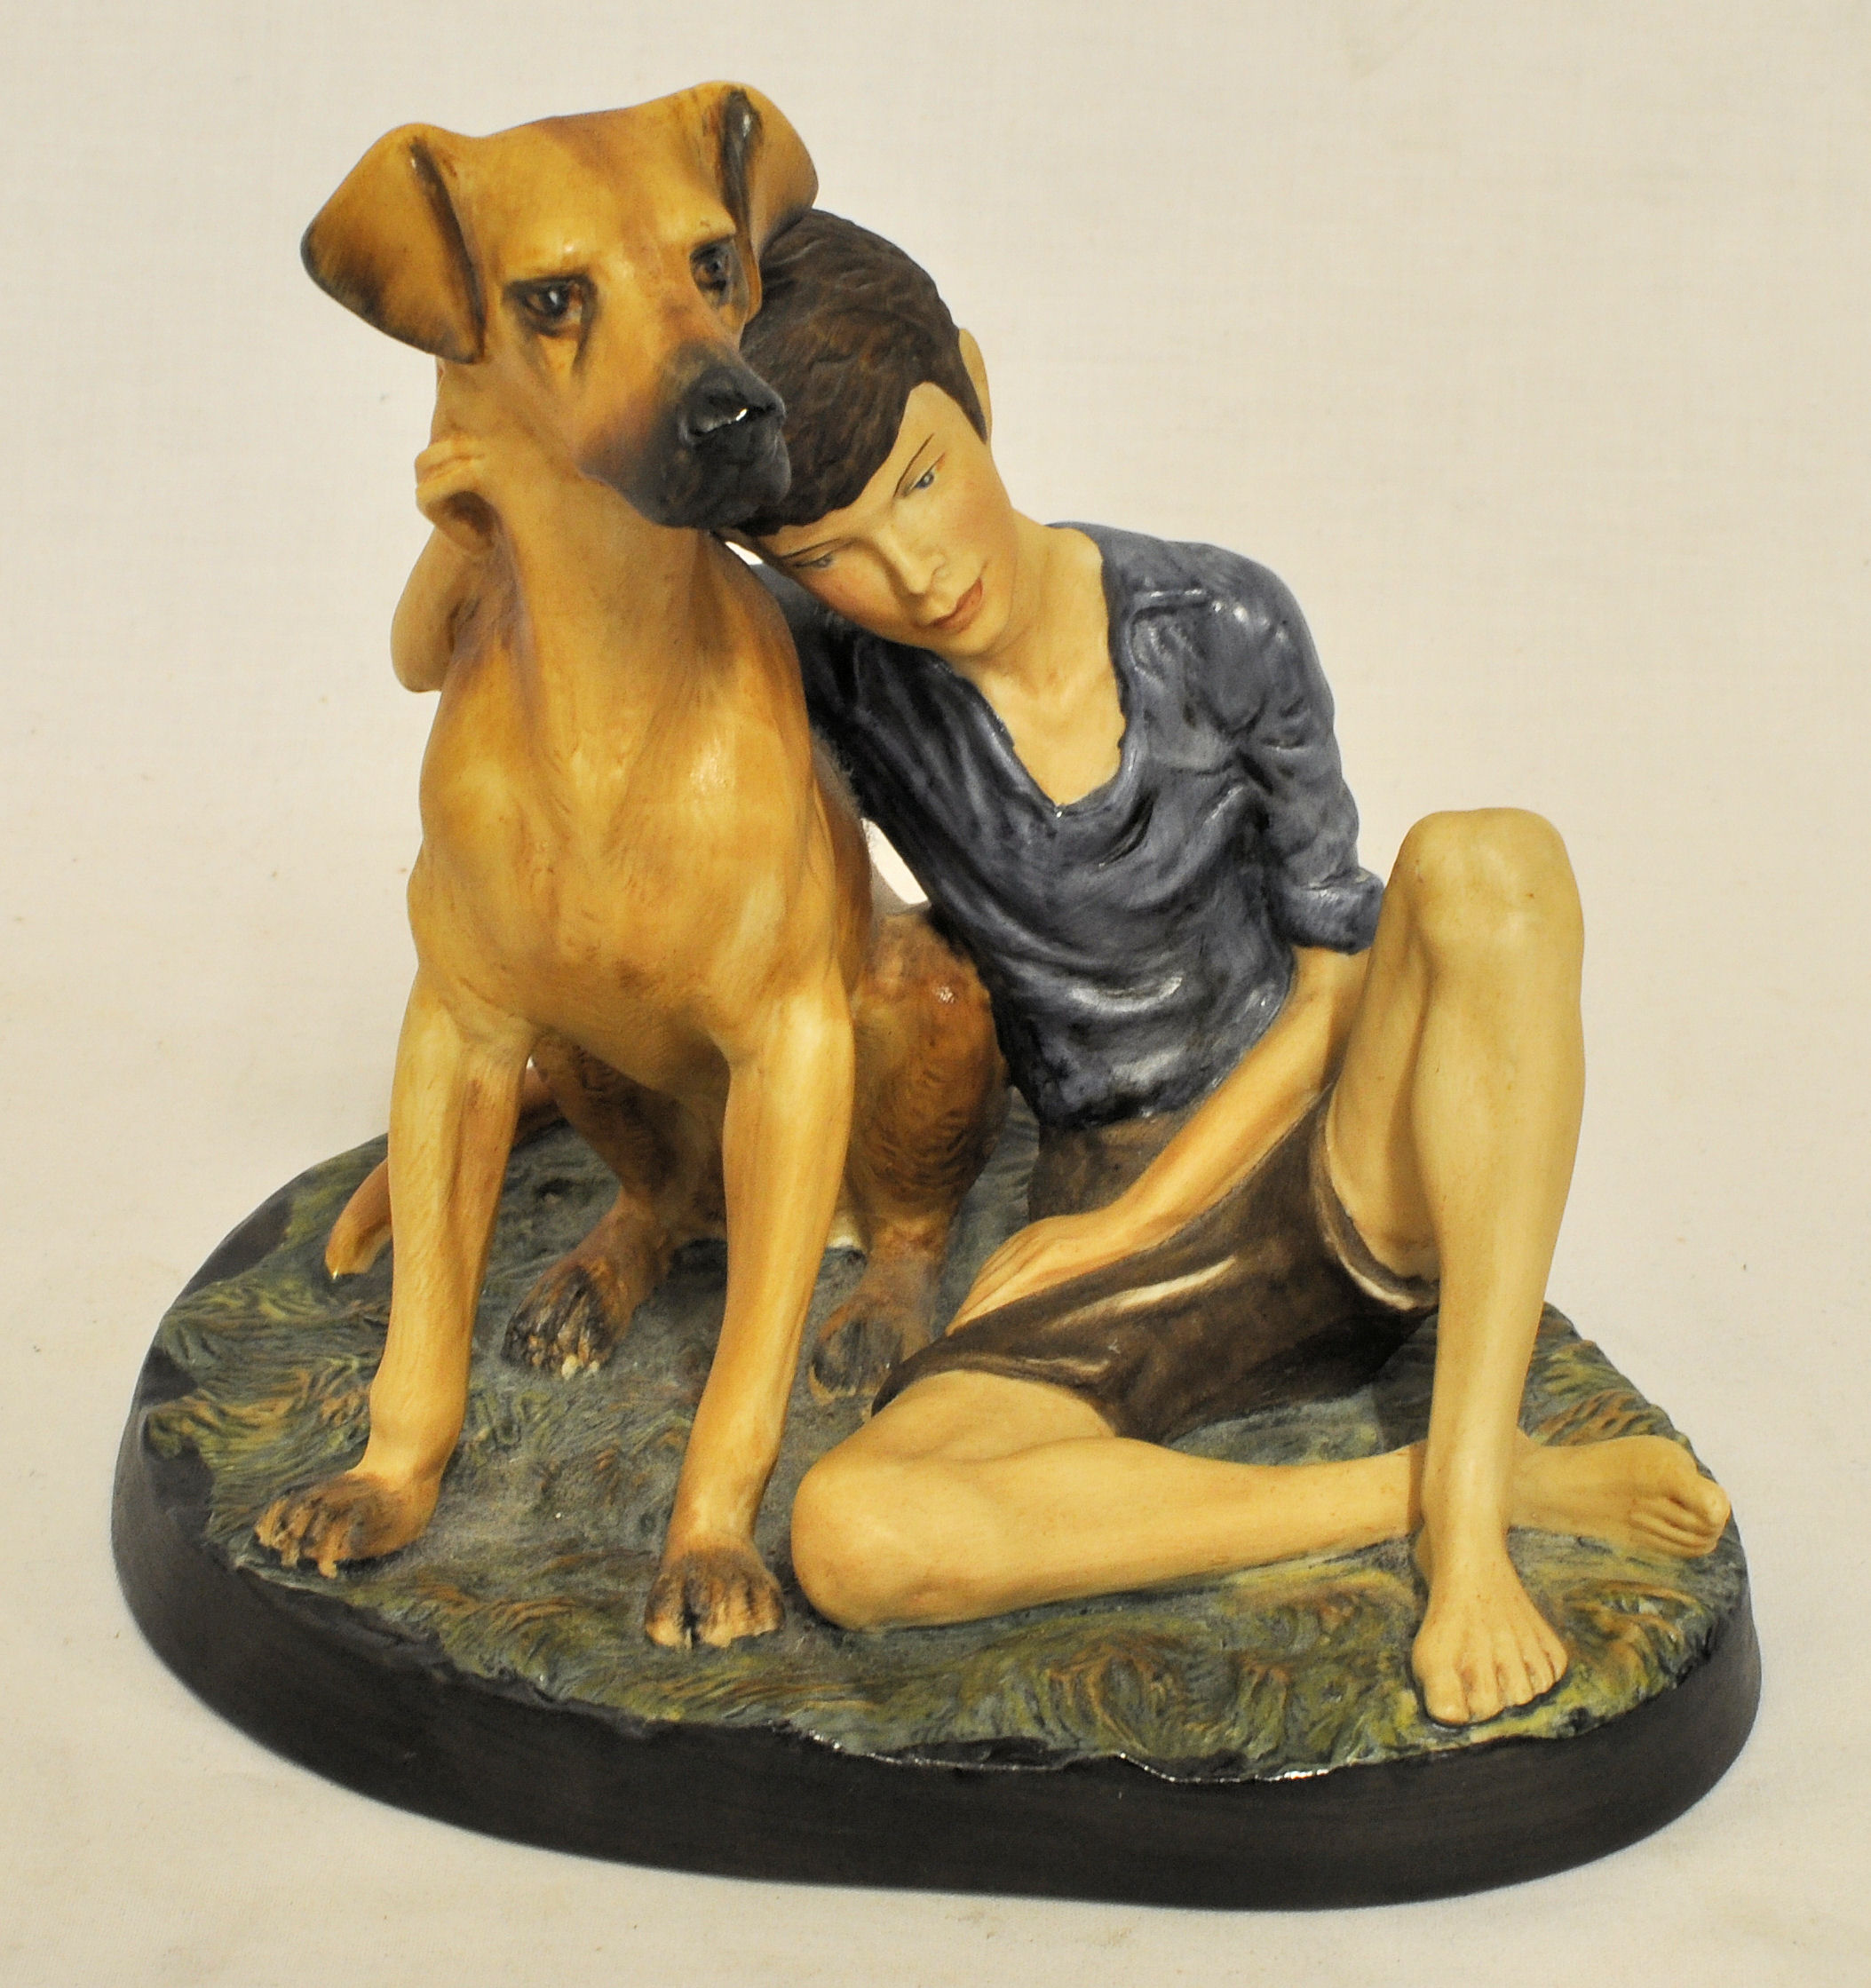 A Royal Doulton figure of a boy with a dog 'Buddies' HN2546.